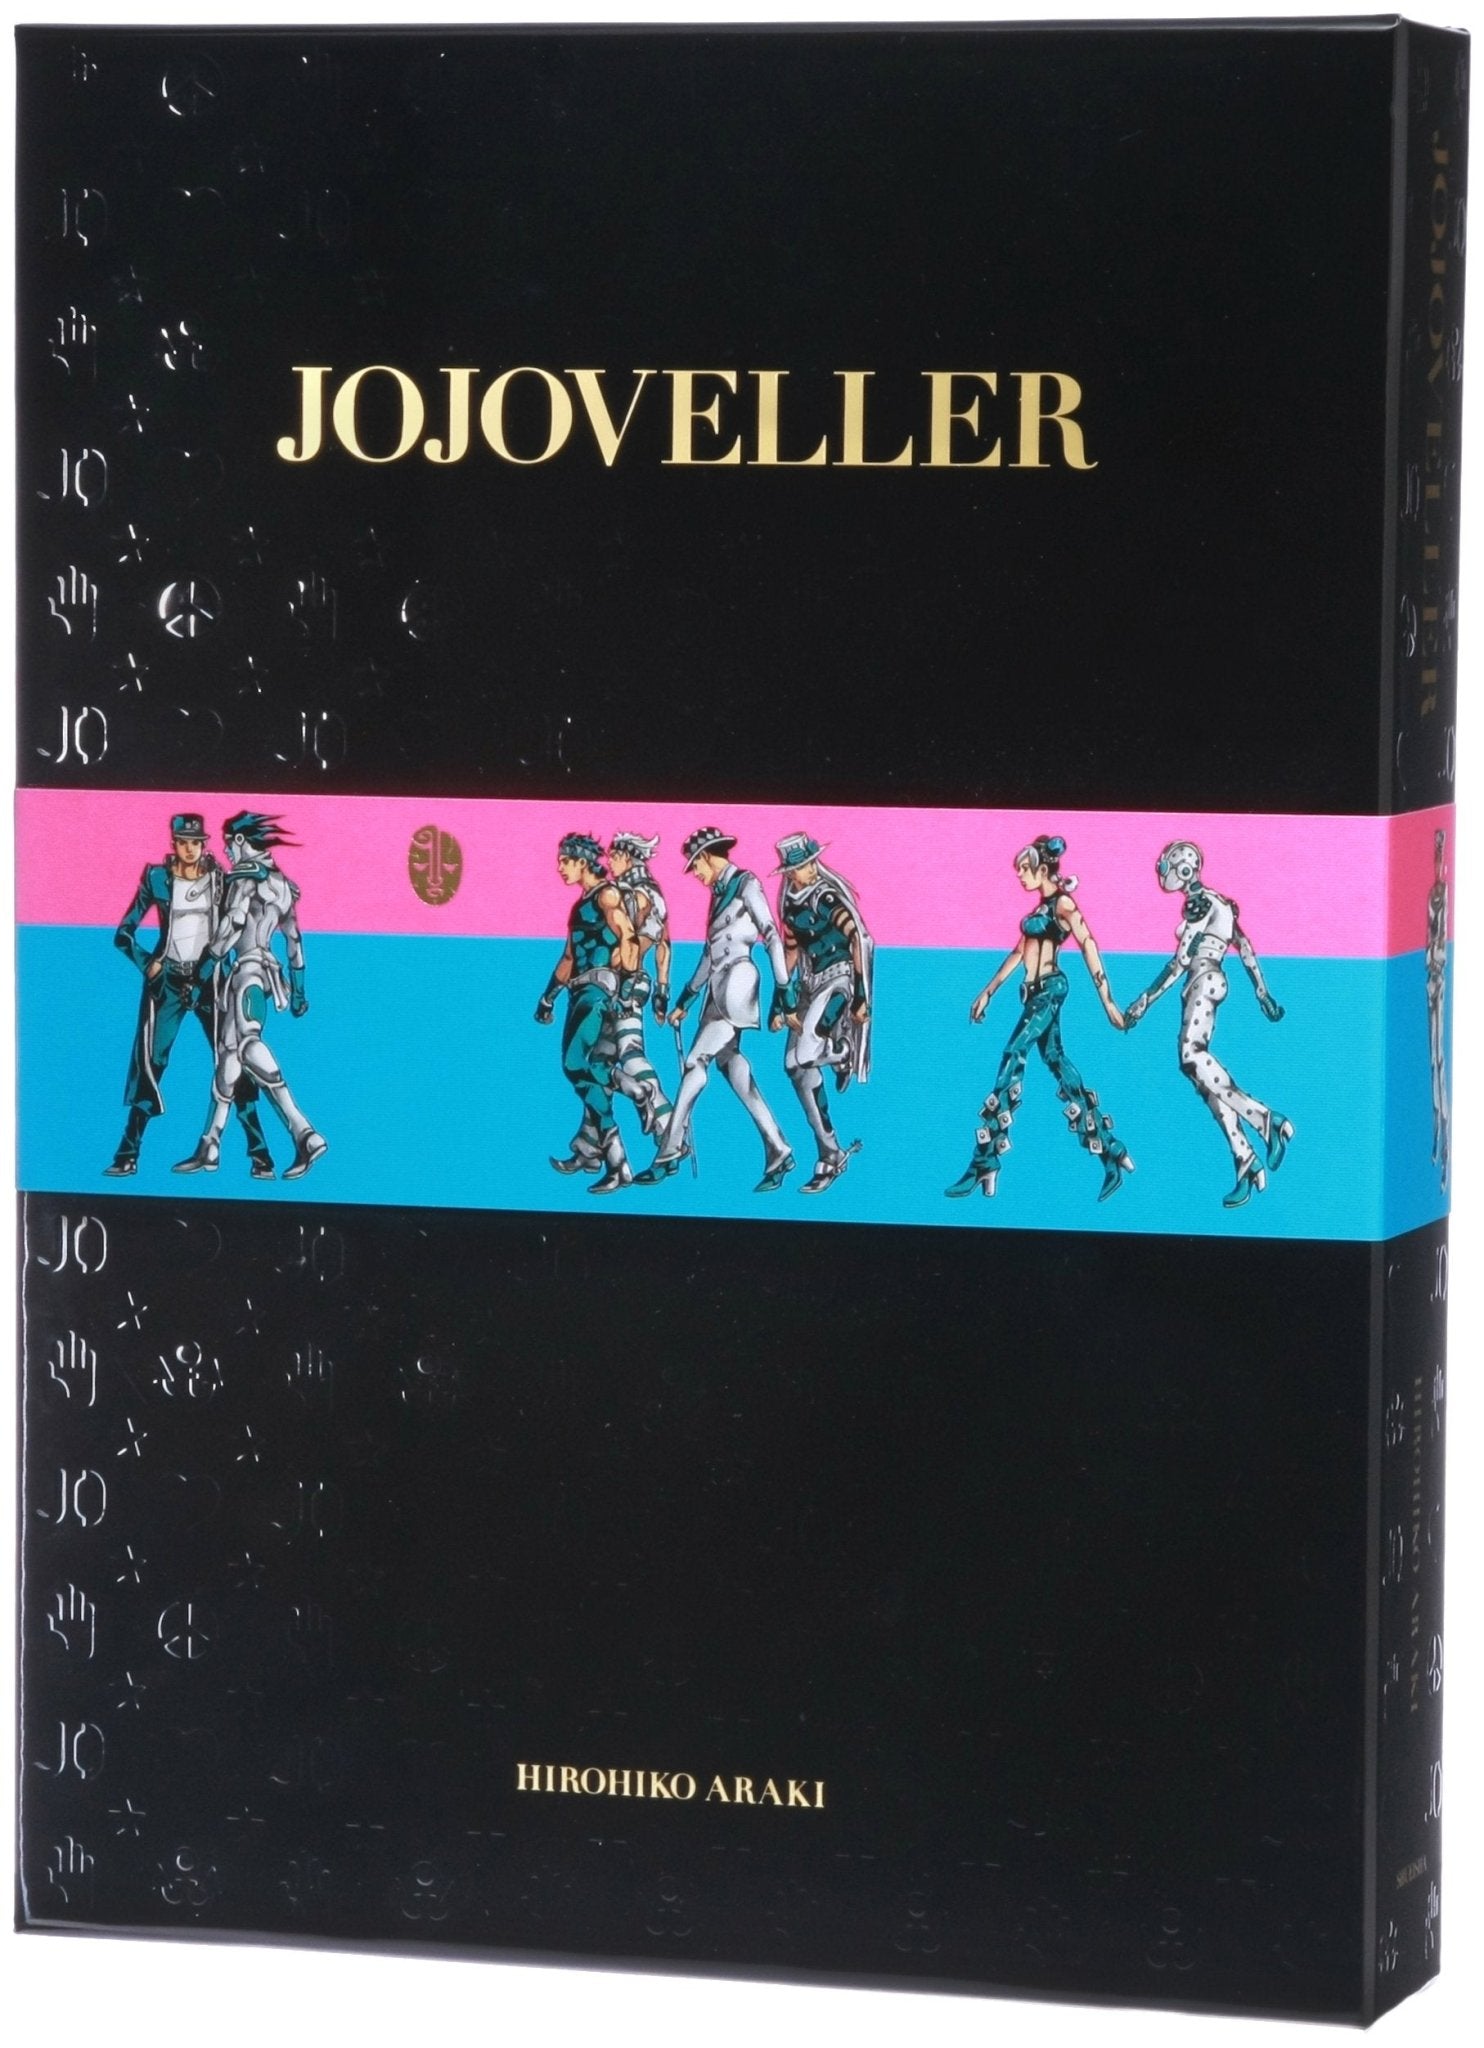 JOJO'S BIZARRE ADVENTURE ARTBOOK - JOJOVELLER - HIROHIKO ARAKI